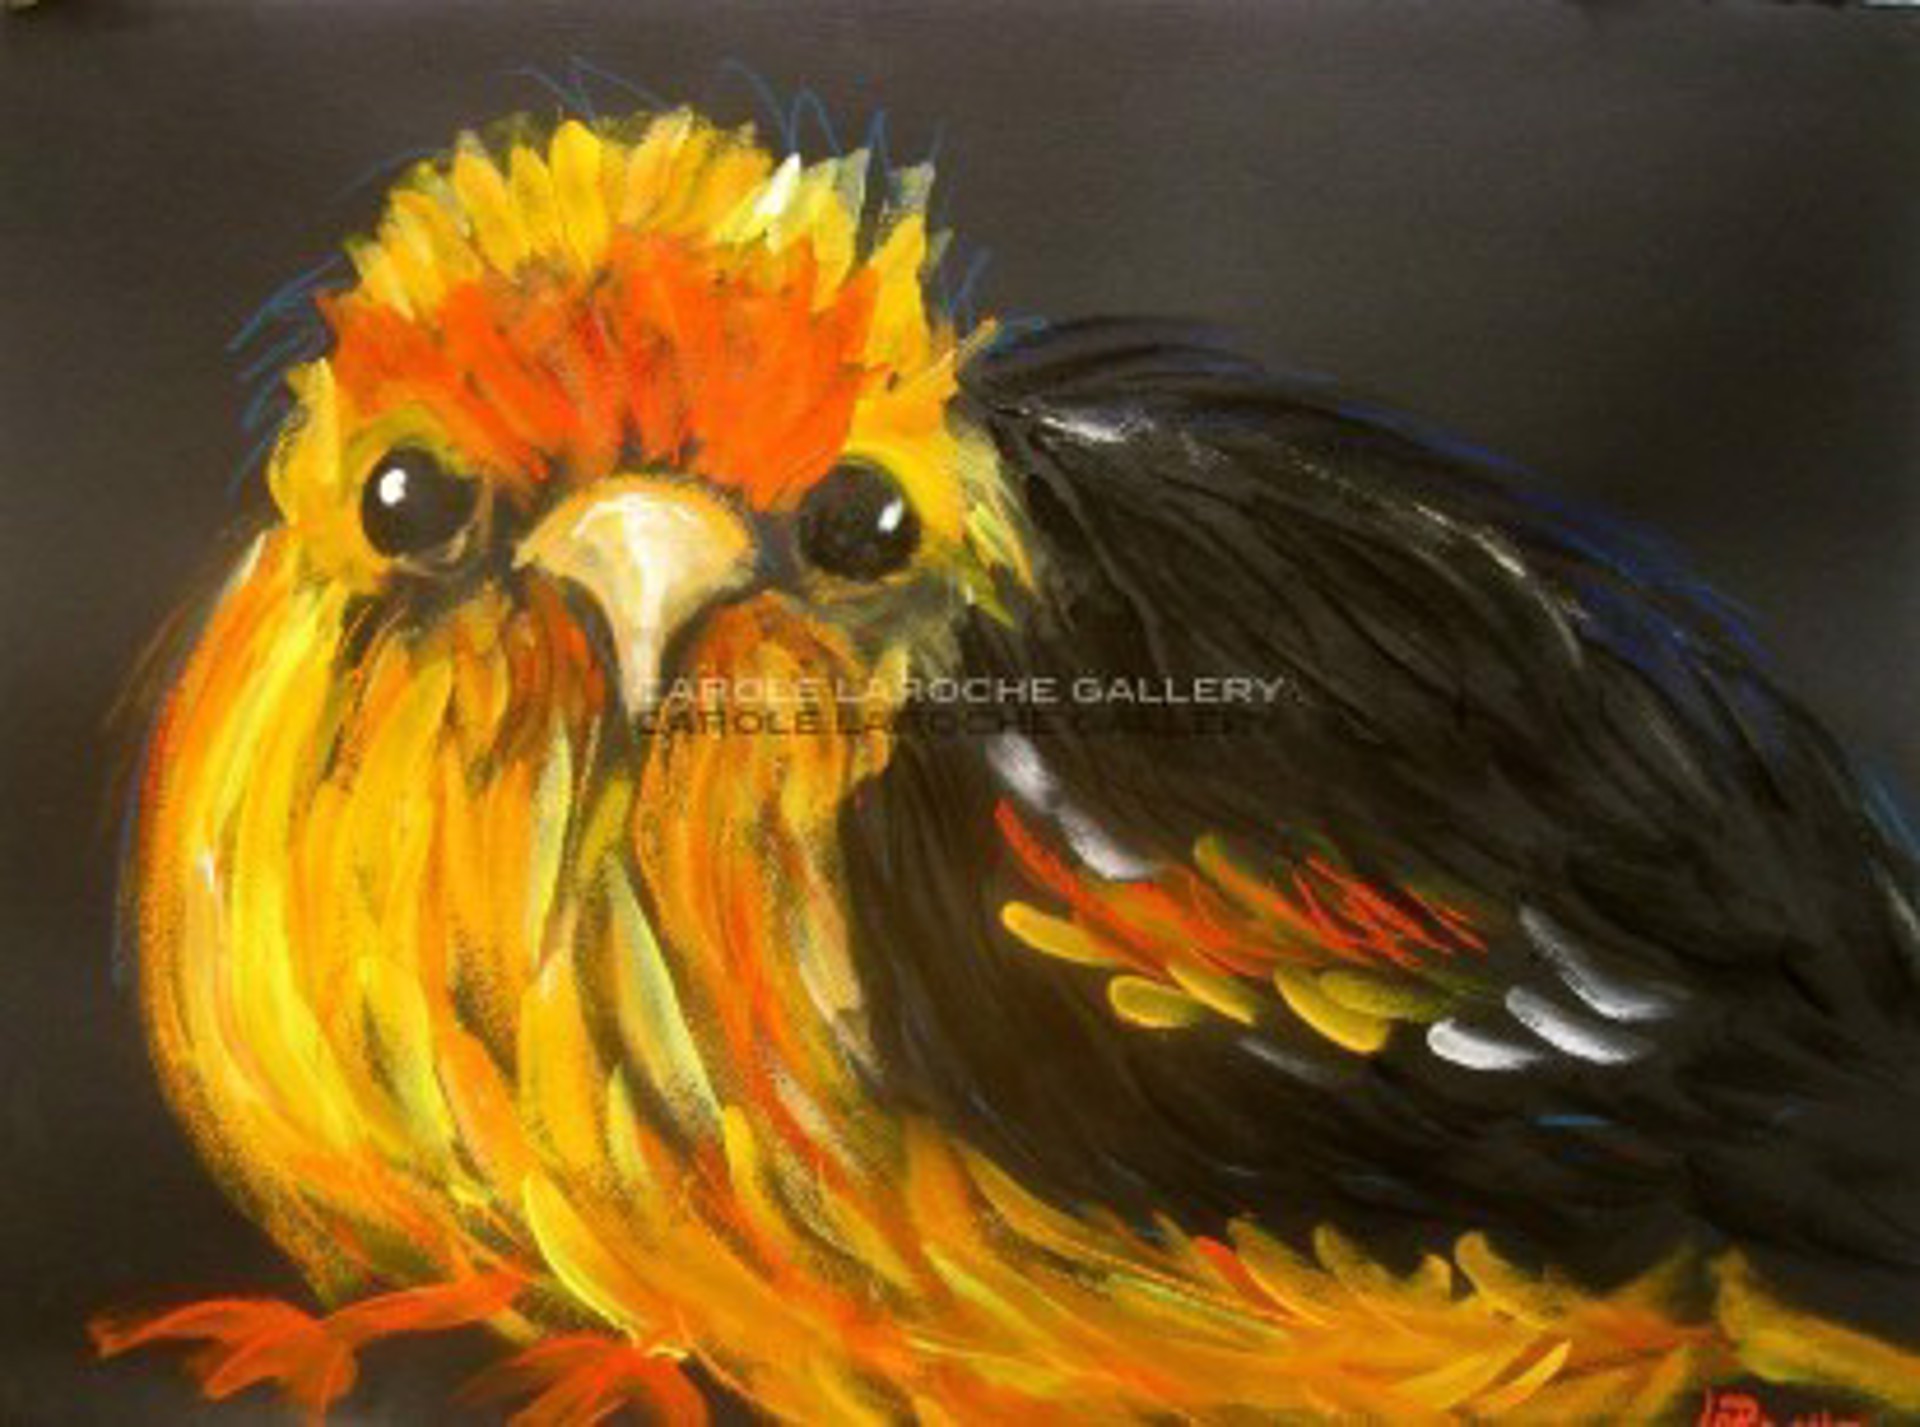 Wild Yellow Bird  by Carole LaRoche